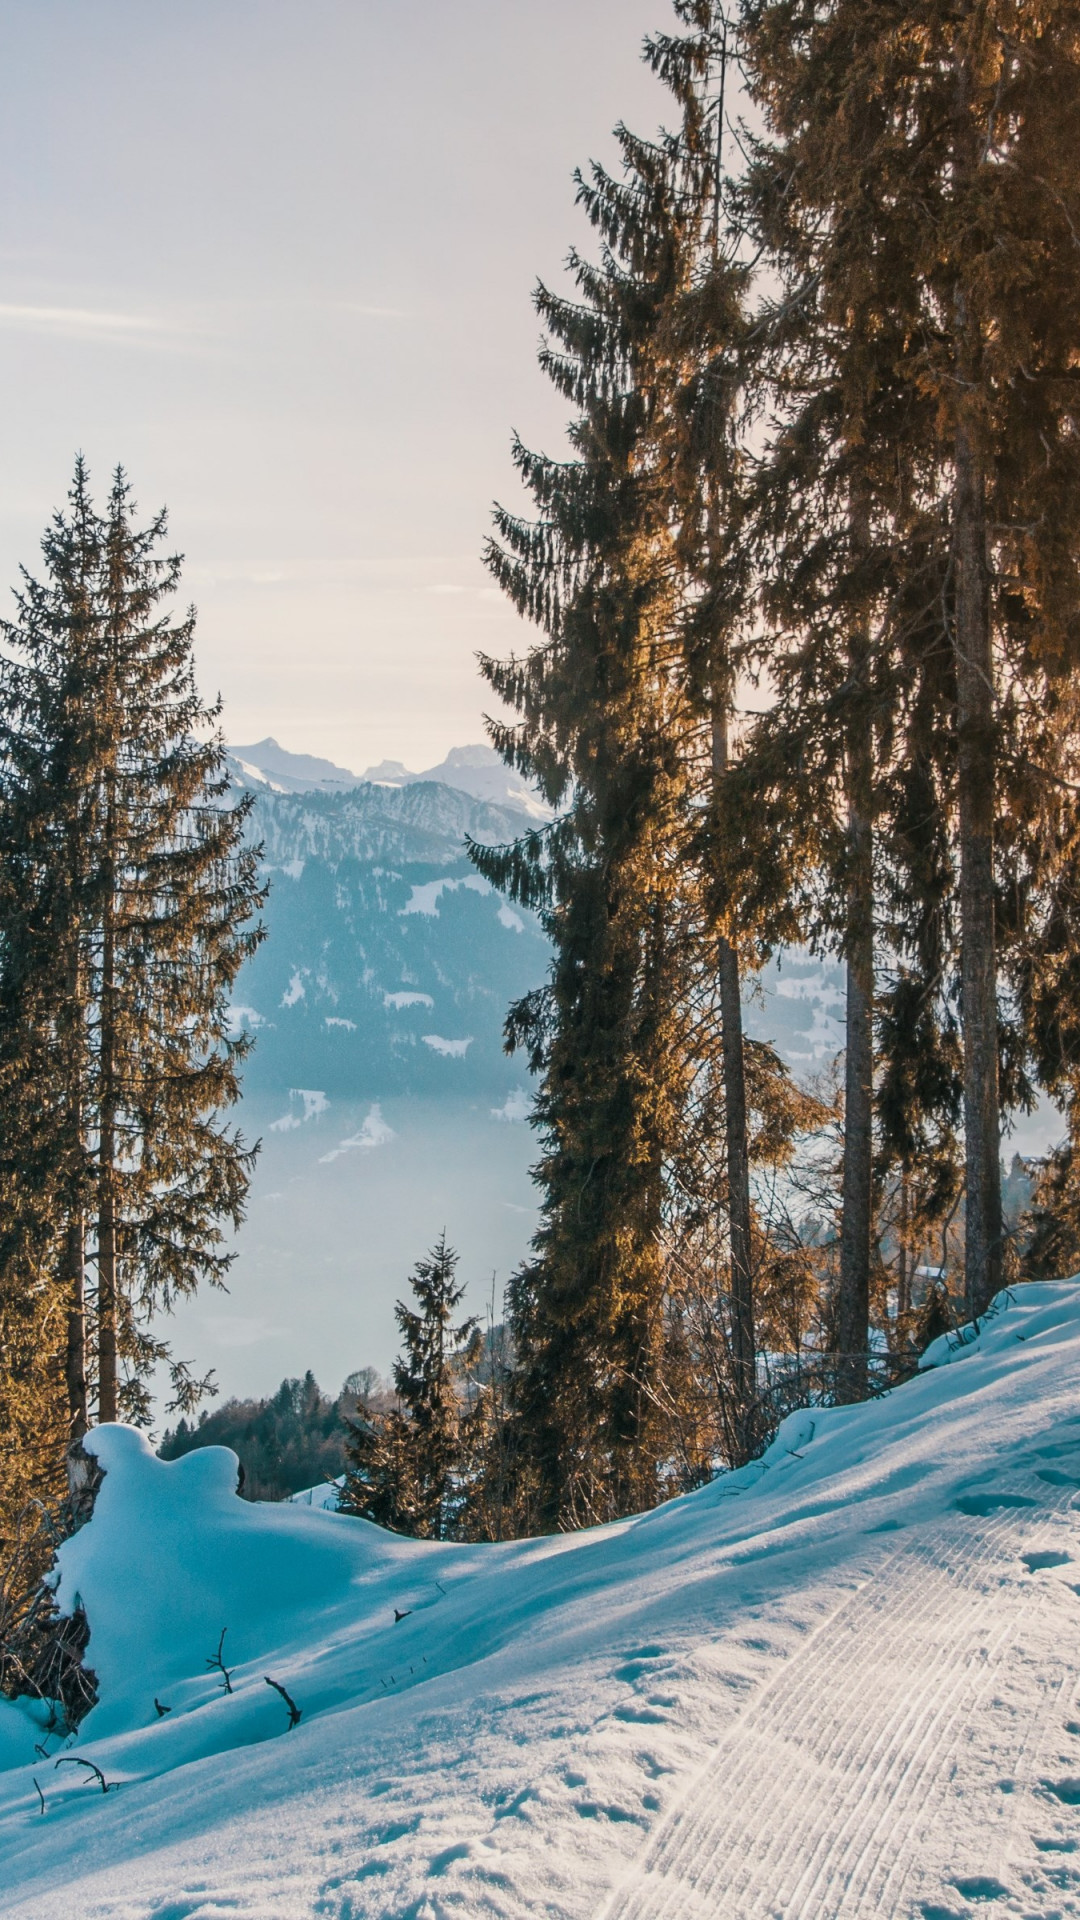 Download wallpaper: Winter, snow, white, sunset, mountains 1080x1920